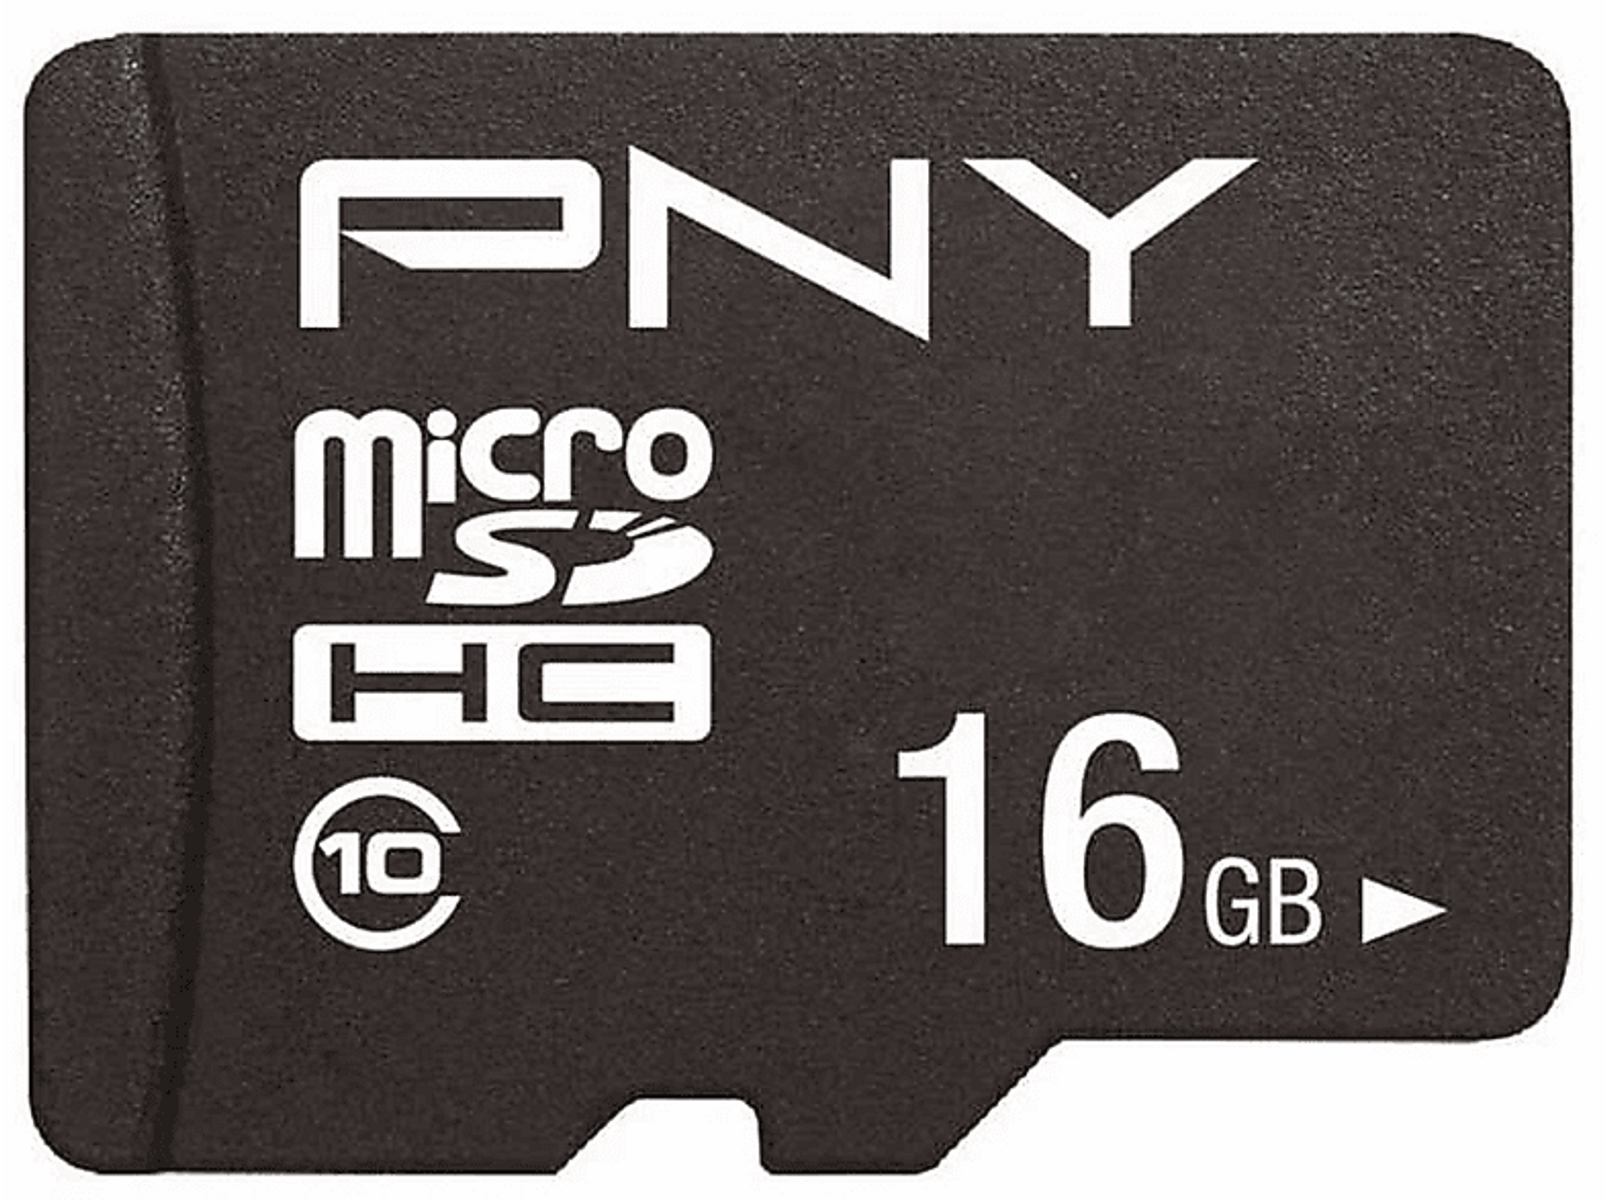 Micro-SDHC, 10 SDHC, PNY Micro-SD, 16 GB, SD Speicherkarte, MB/s m0000CK35U,